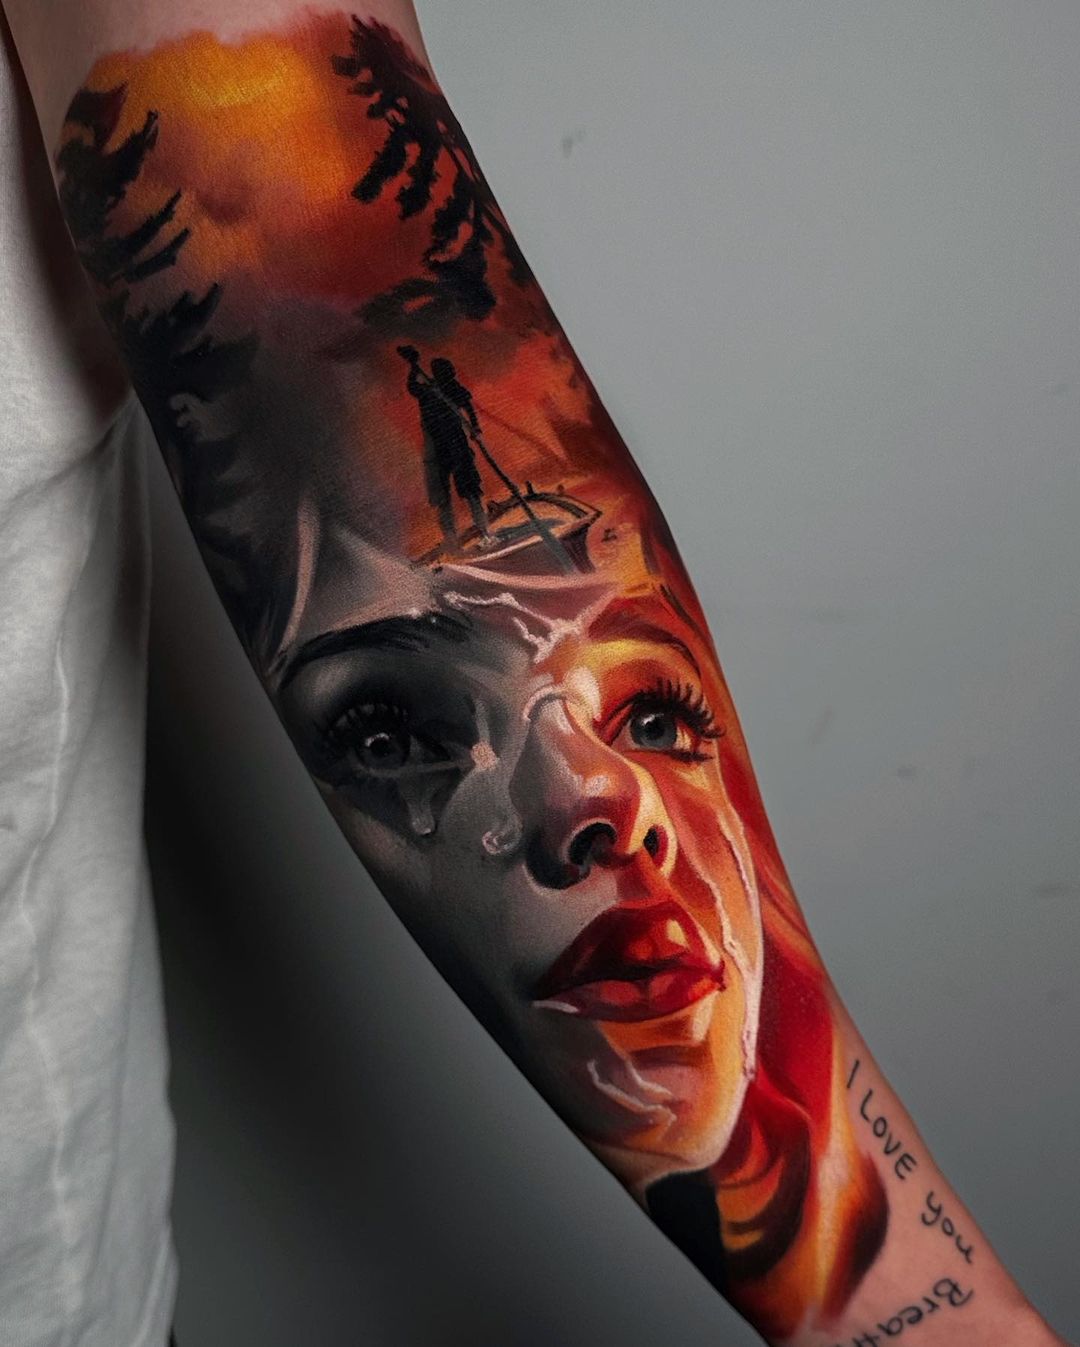 Portrait tattoo on forearm by